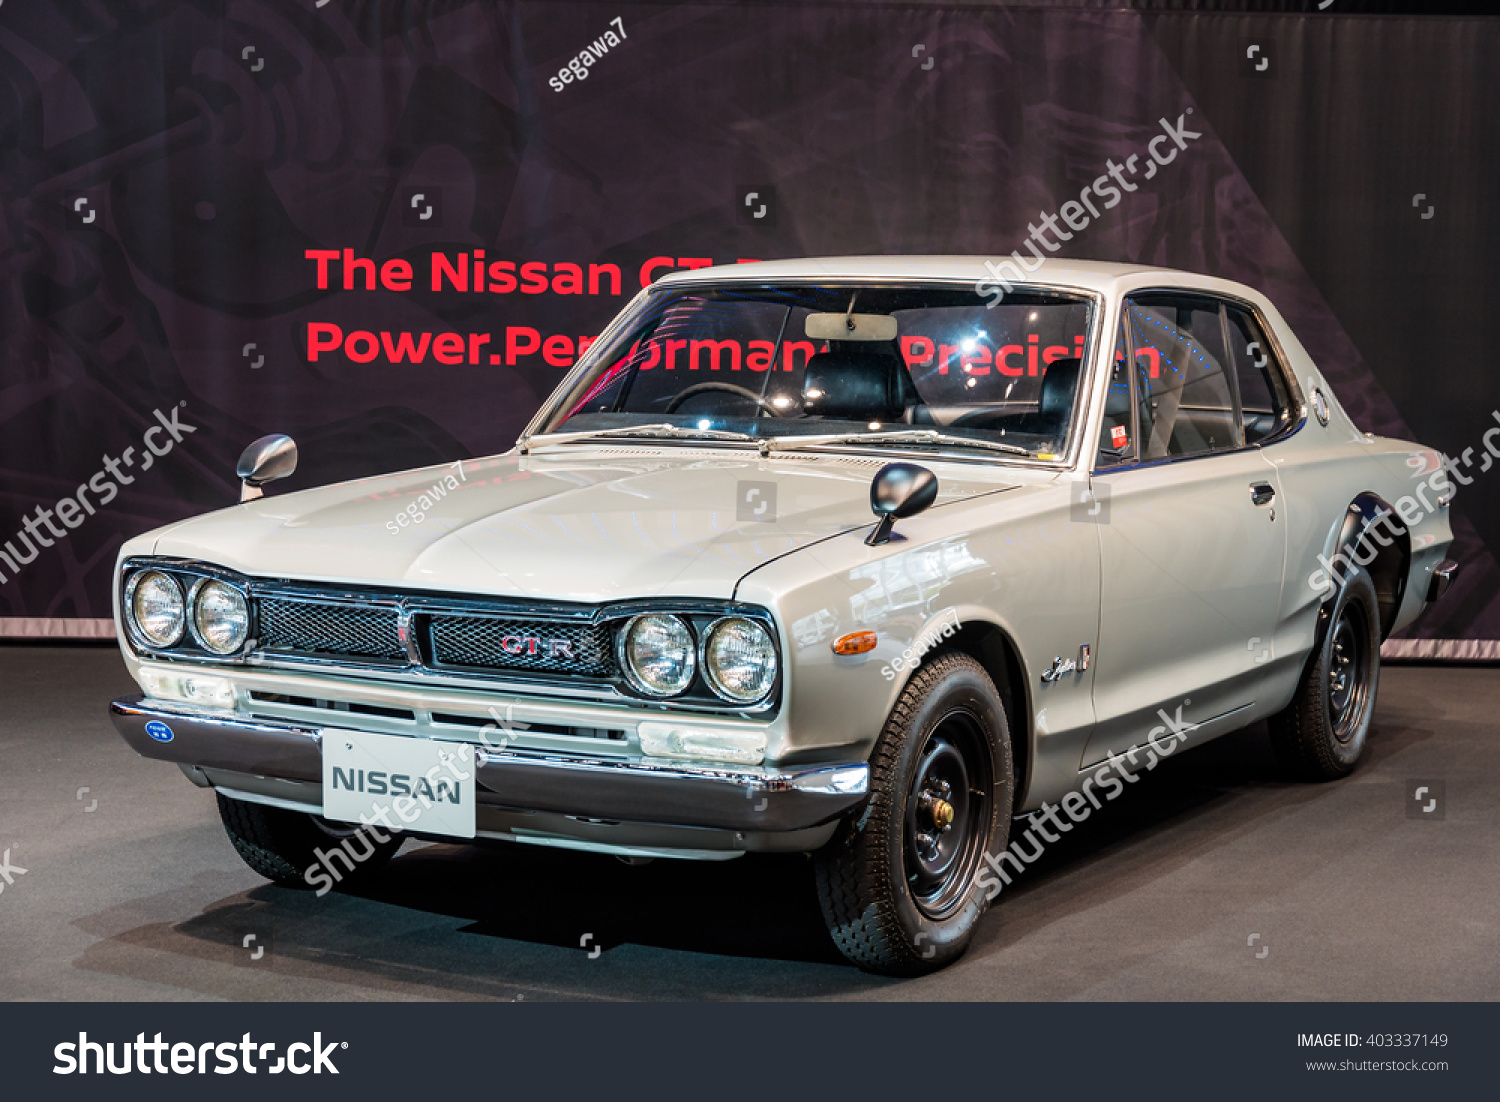 Nissan african american advertising #2